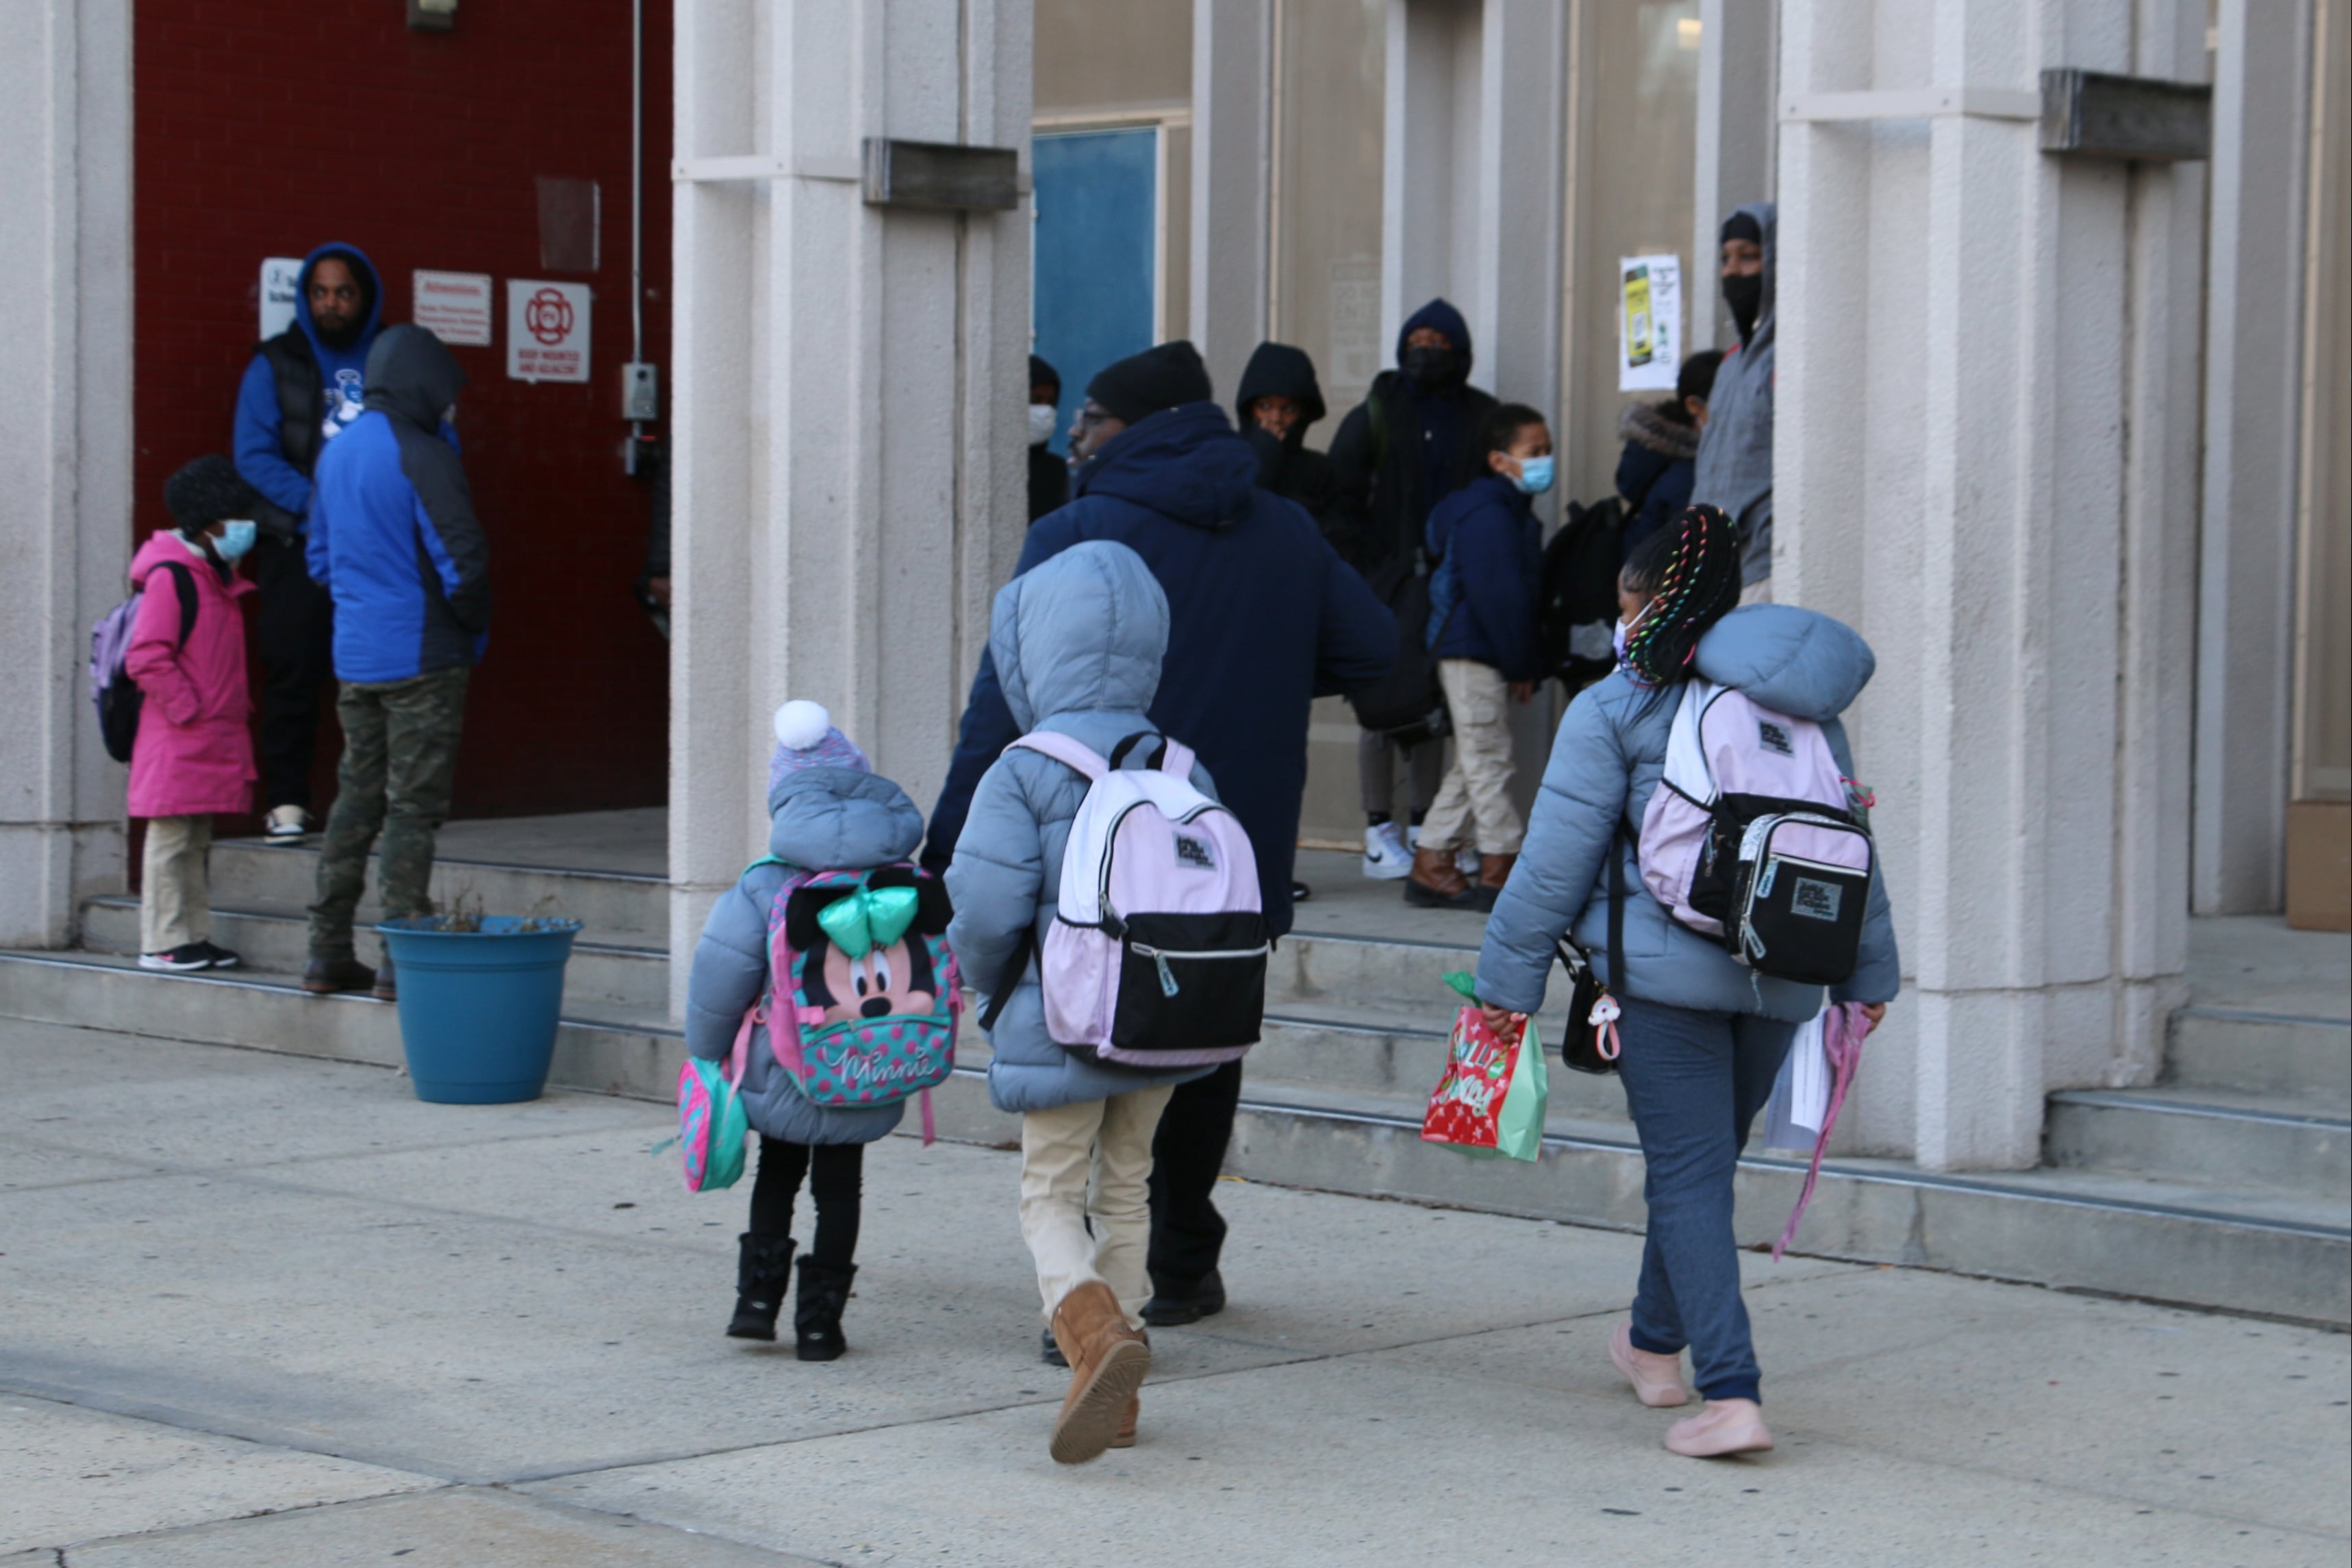 Children, wearing winter jackets and carrying backpacks, walk into Camden Street Elementary School.